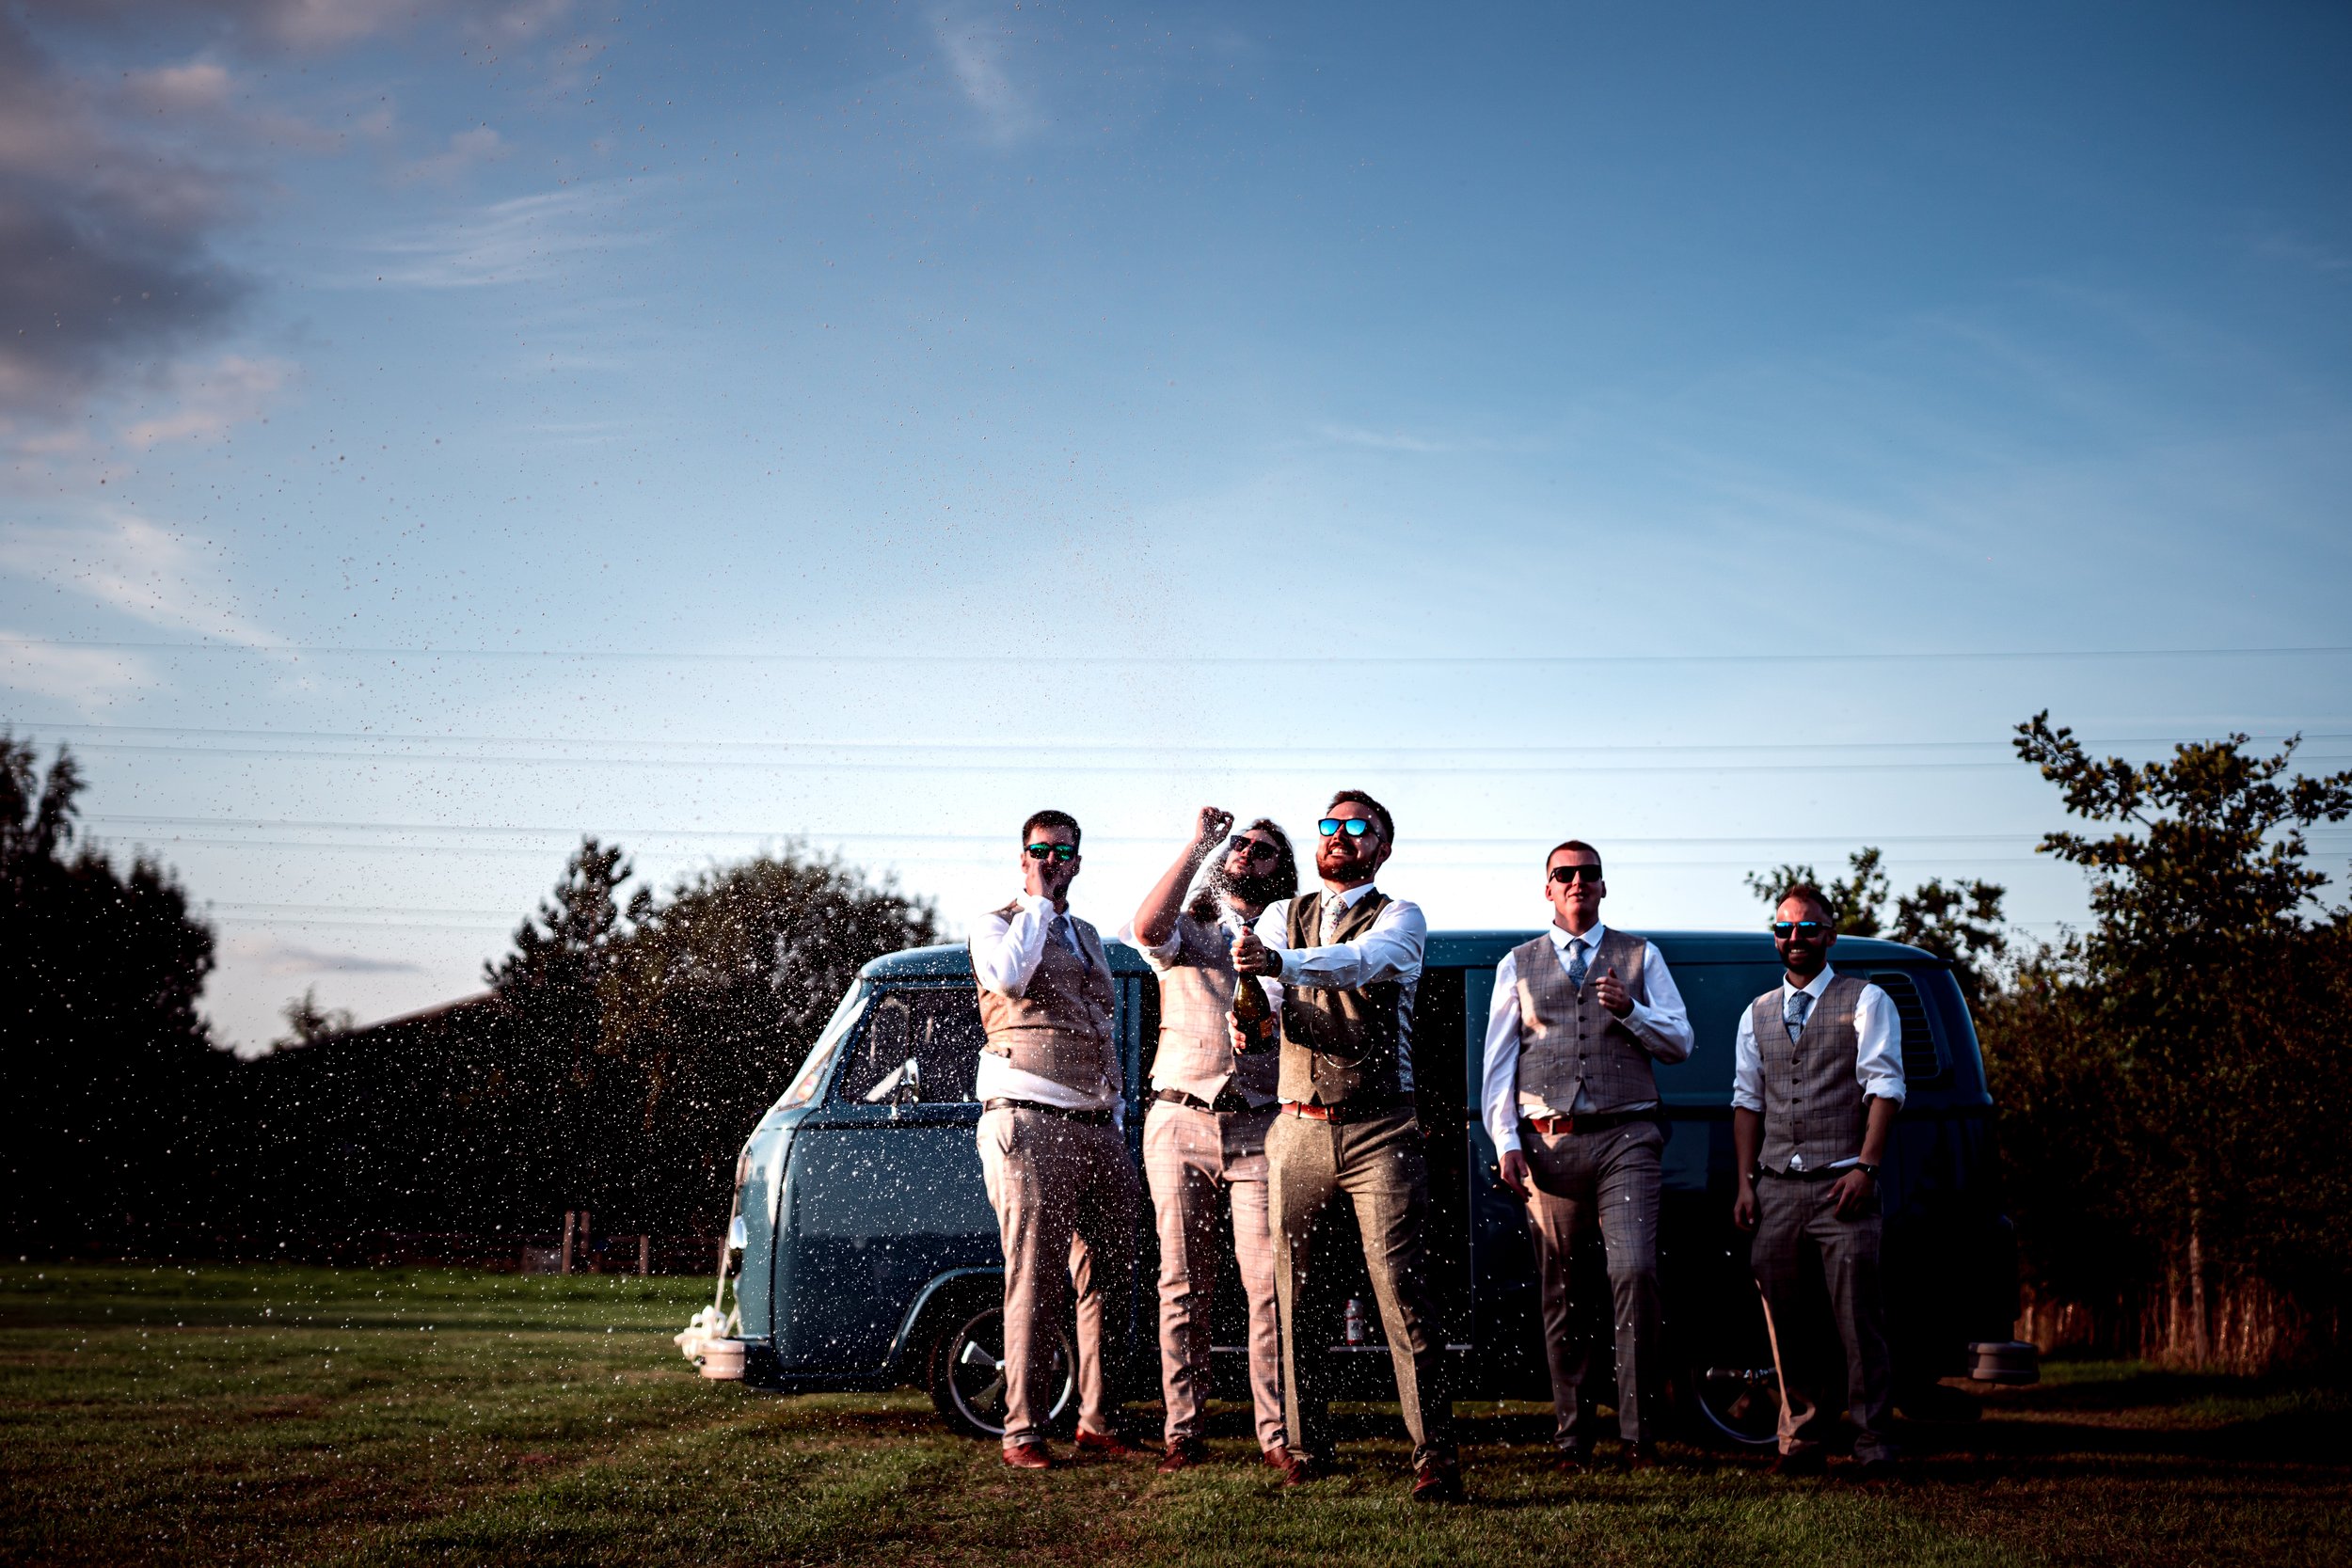 Walker_McCabe Wedding_Photographer Ashtree_Farm Market_Harborough Festival VW Colourful Wedding-42.jpg